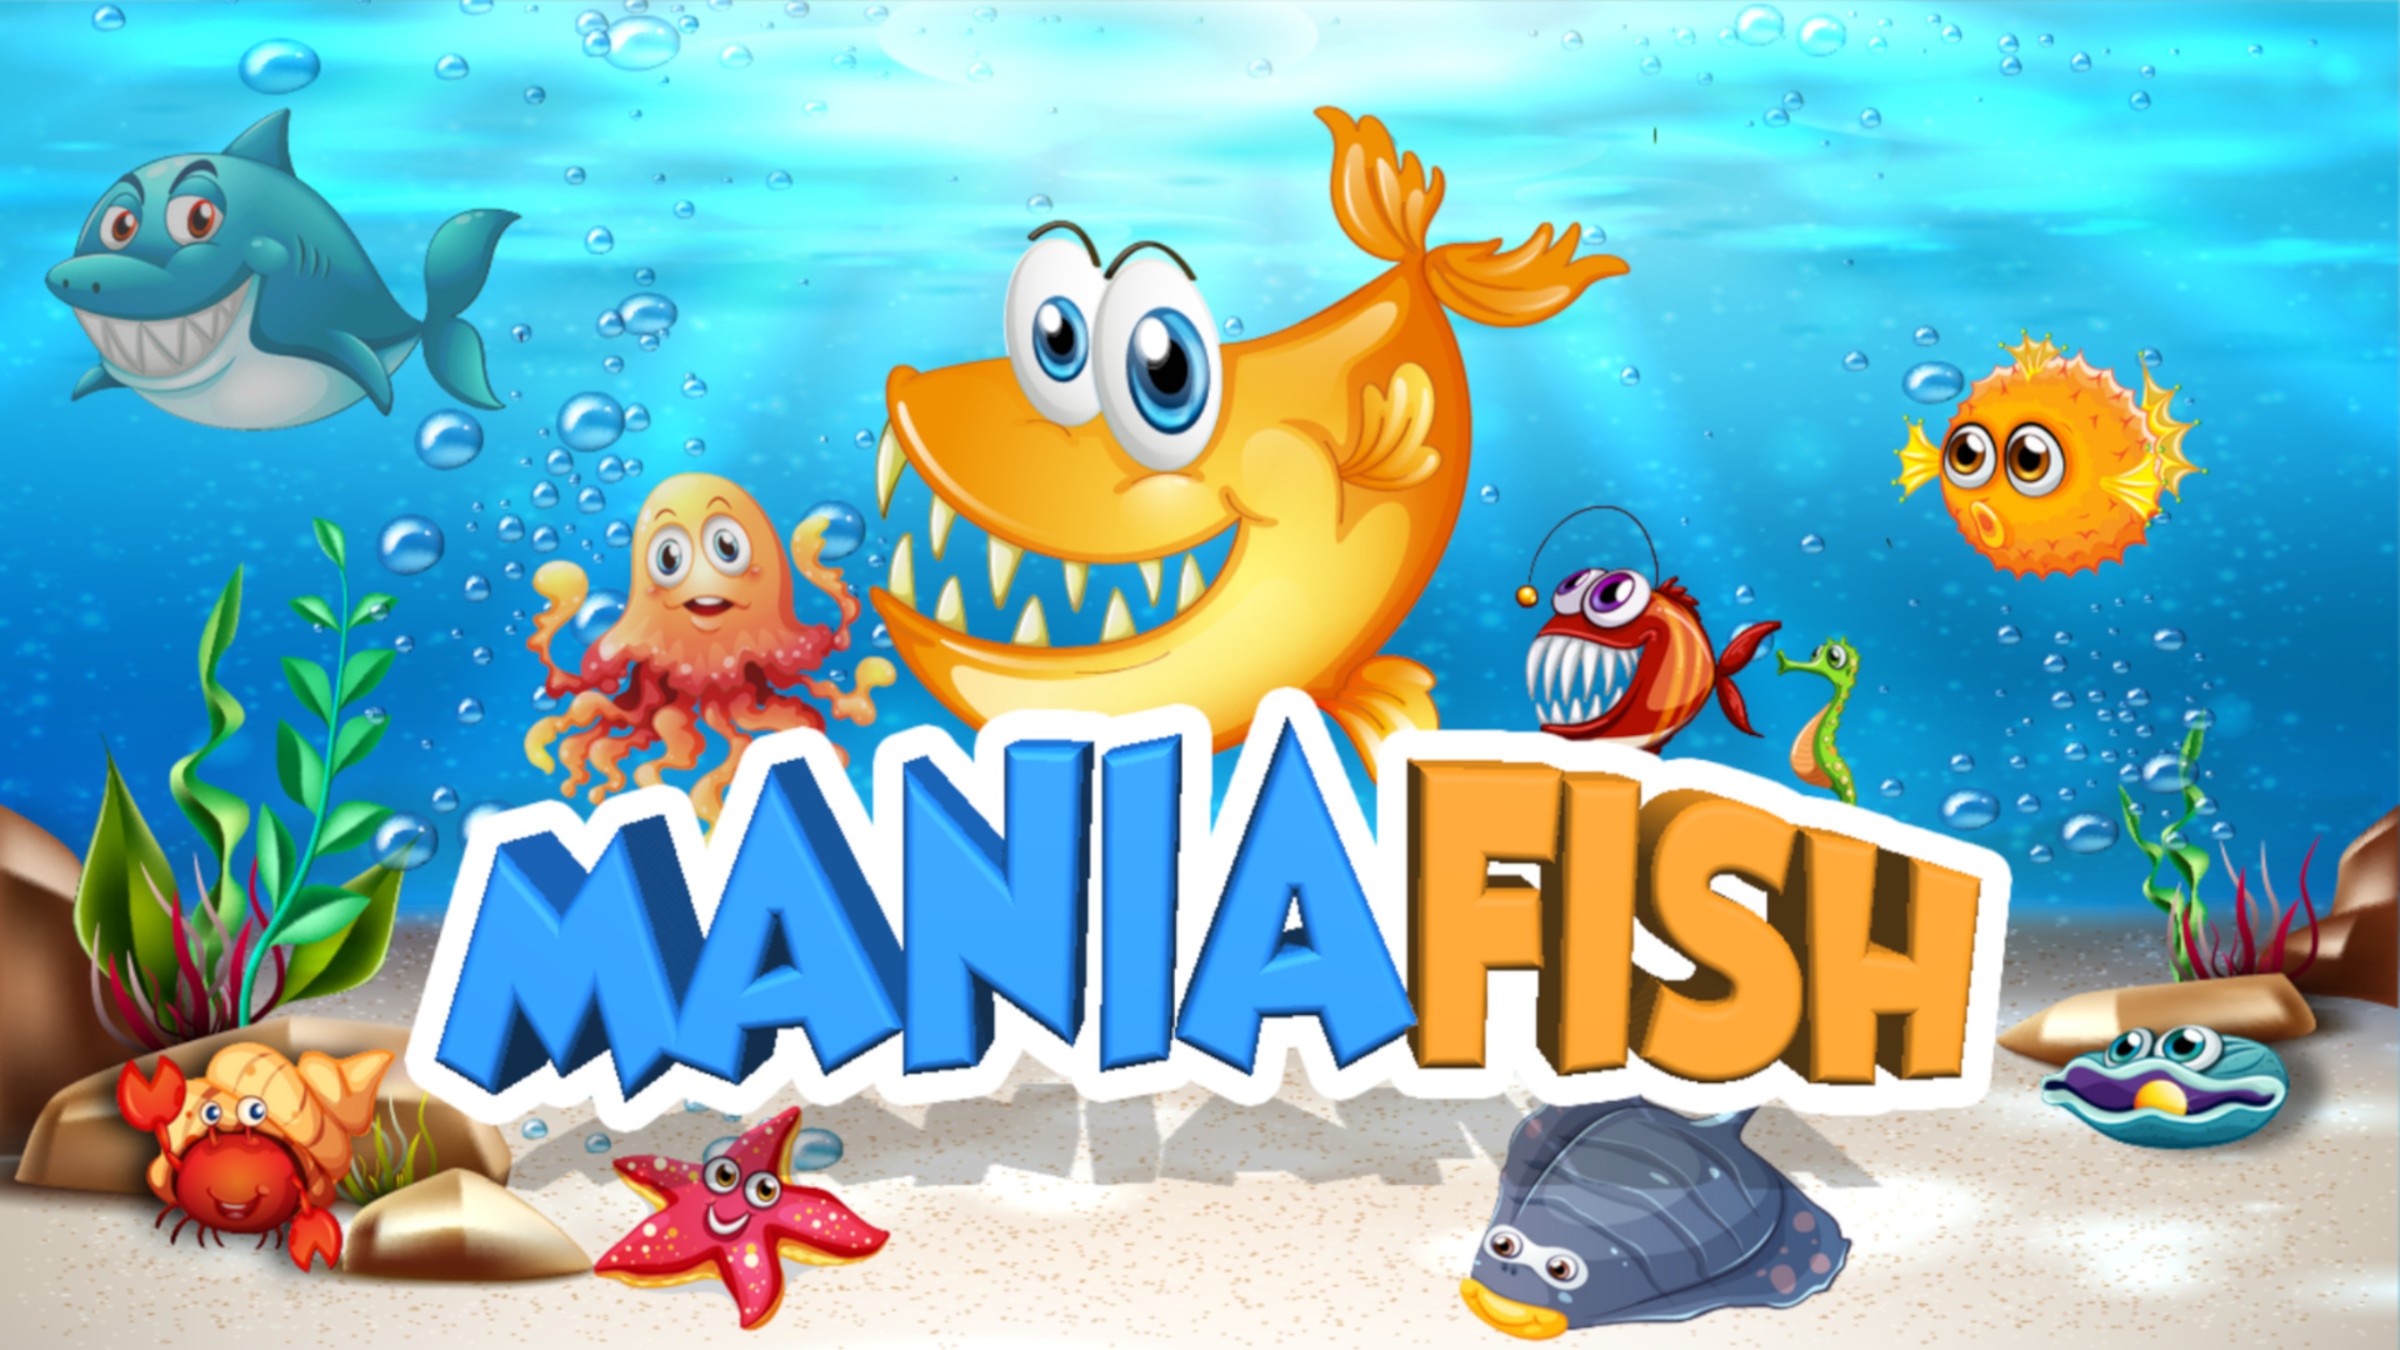 Mania Fish for Nintendo Switch - Nintendo Official Site